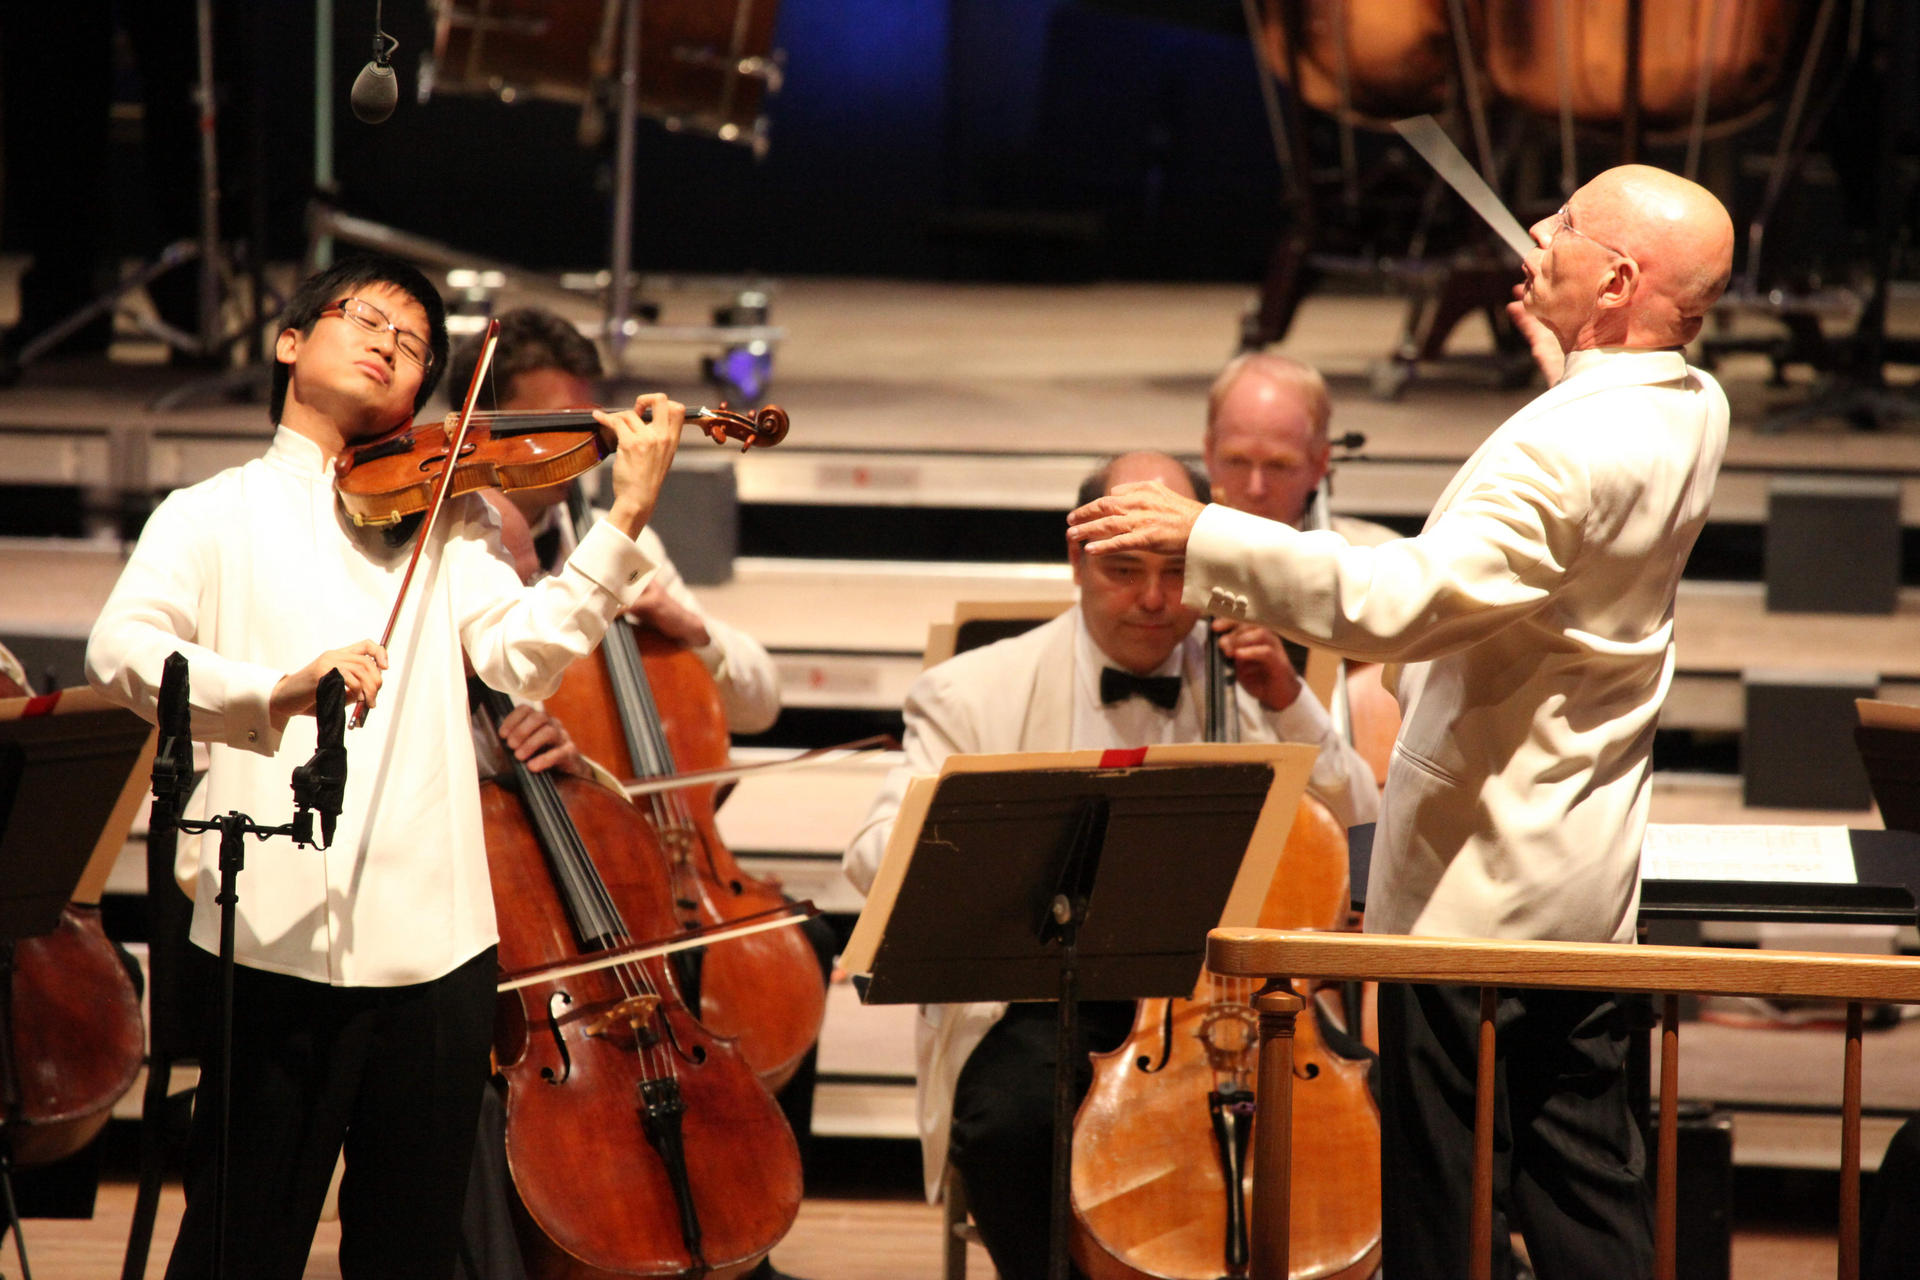 Violinist Zhu Dan plays under the baton of conductor Christoph Eschenbach.